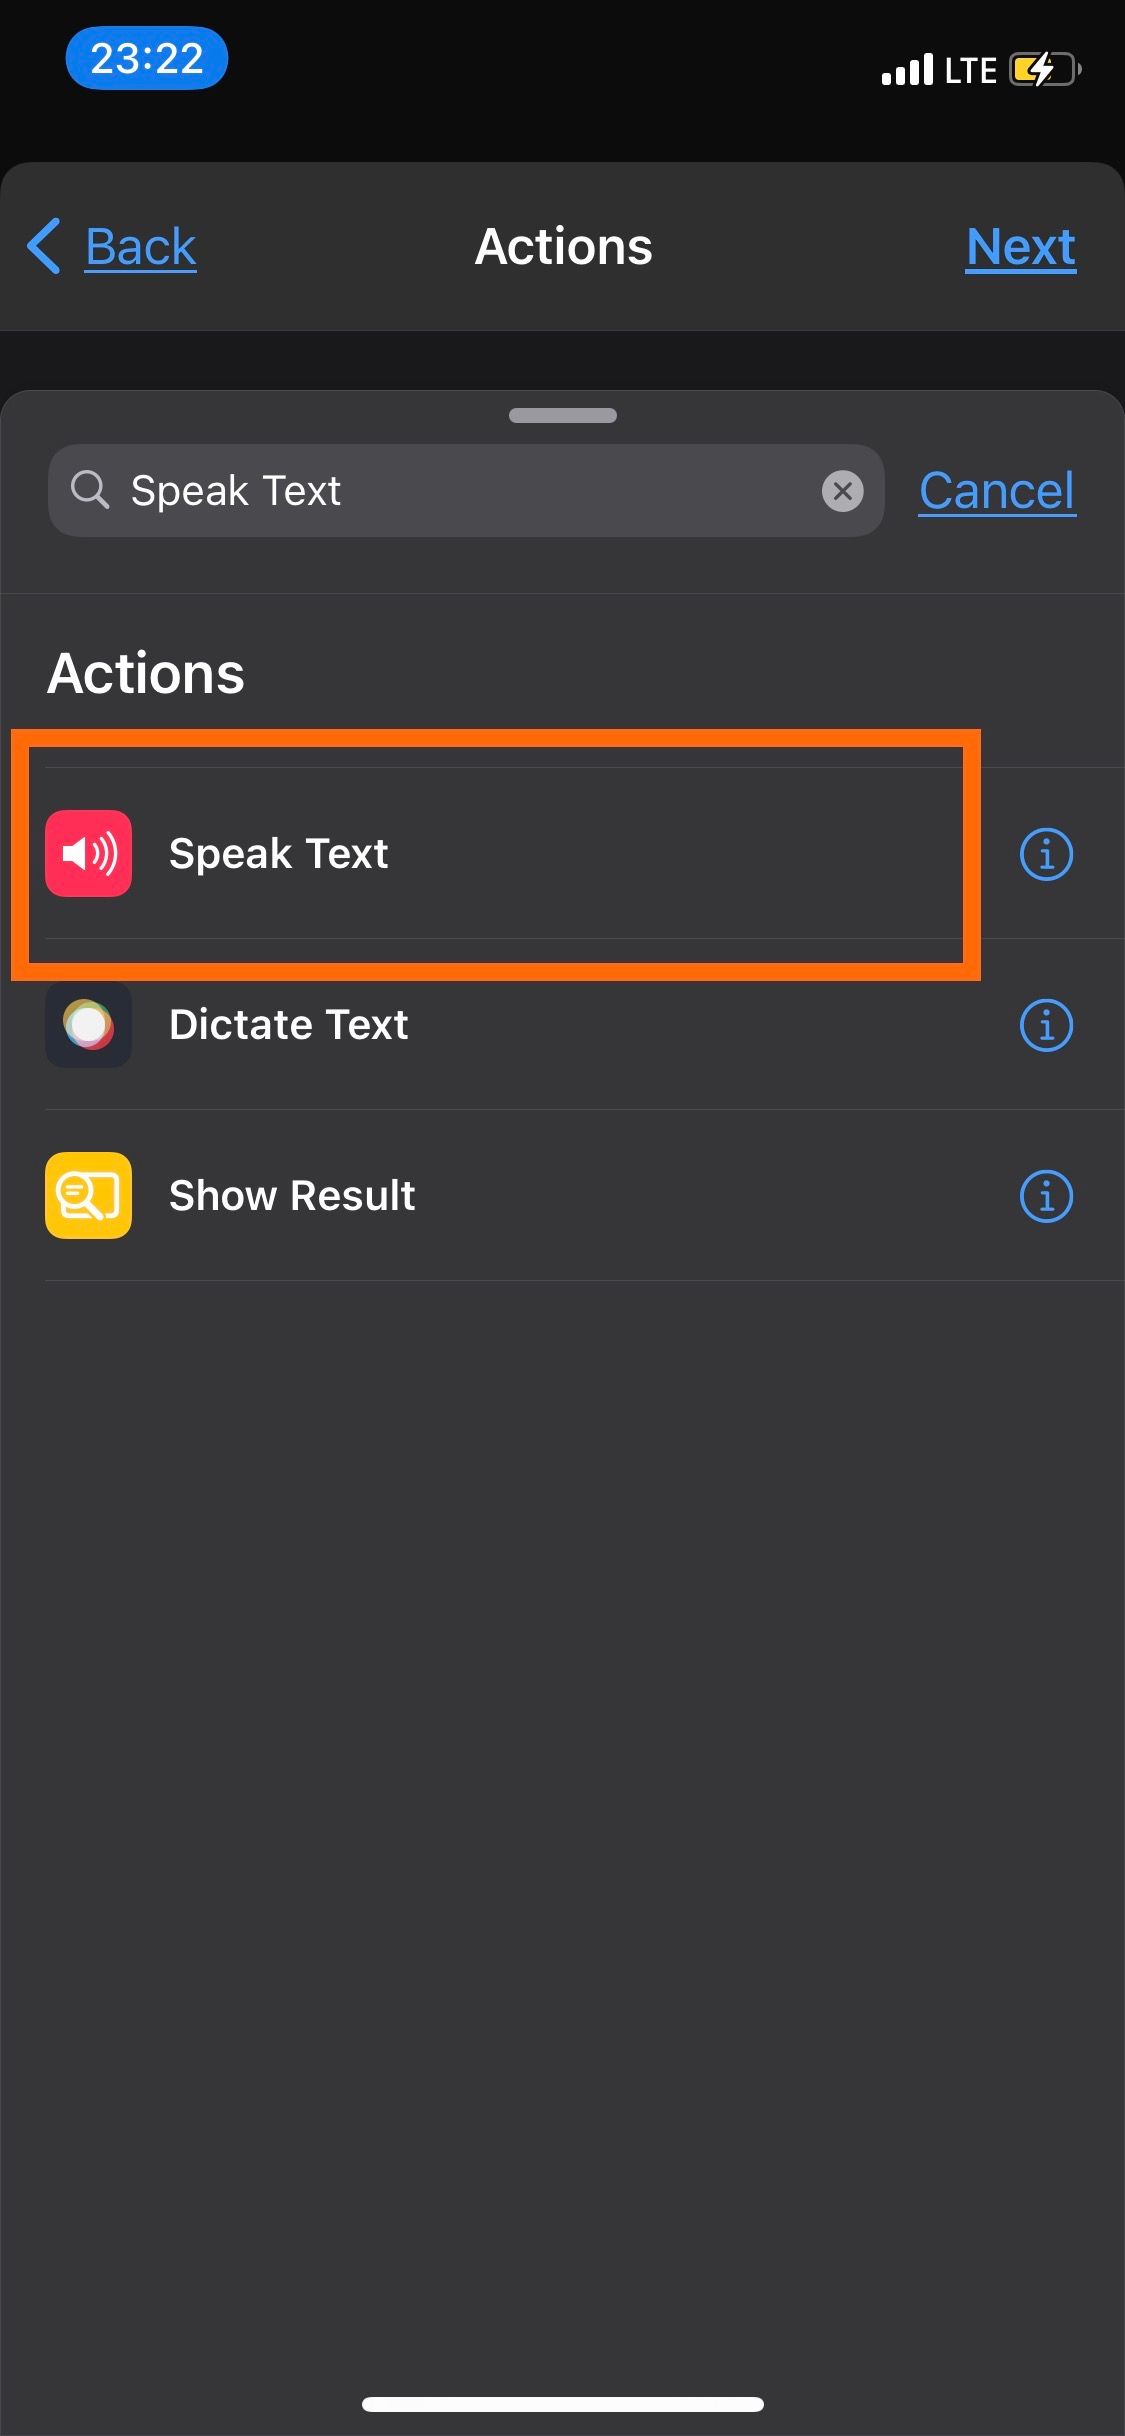 Speak Text action in Shortcuts app.